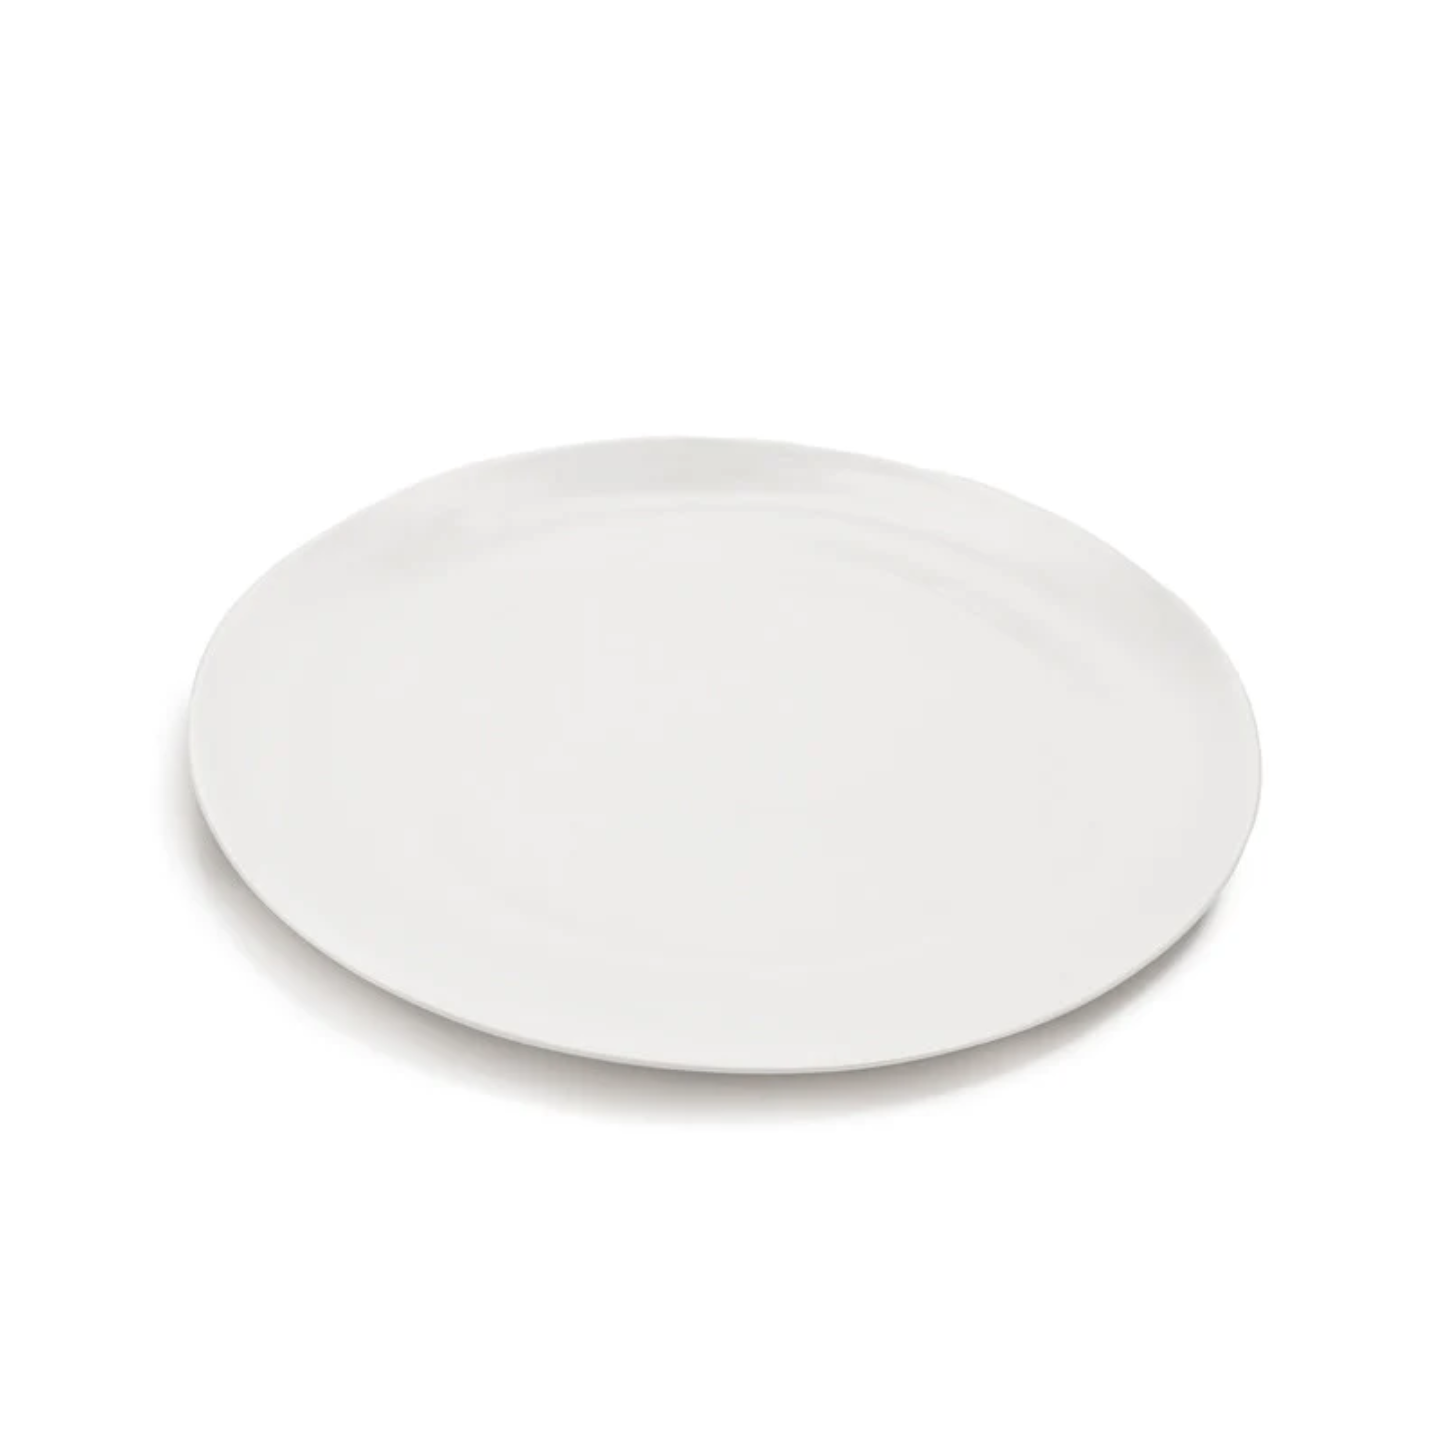 Ripple White Plate